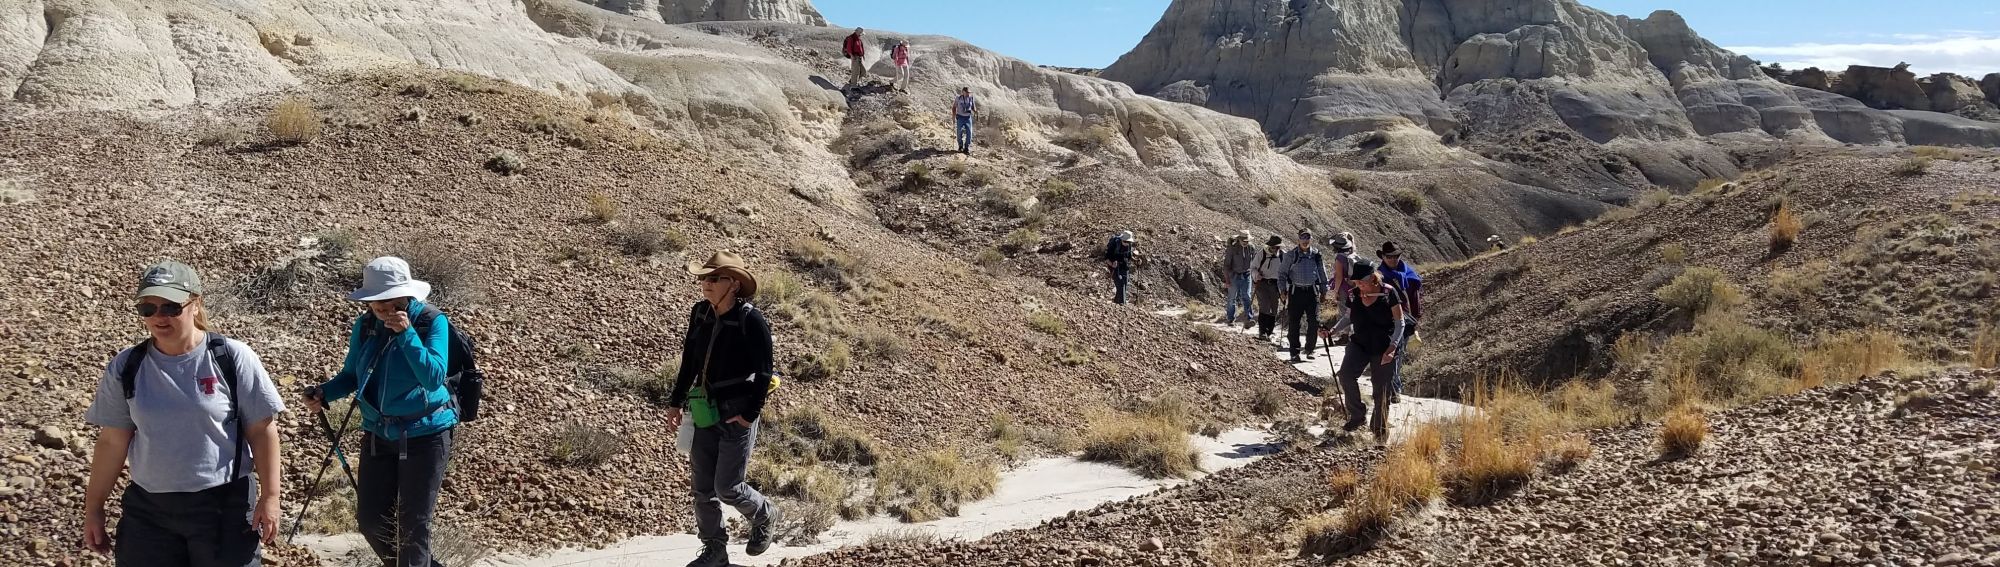 Tunnel Springs – Albuquerque Senior Centers' Hiking Groups (ASCHG)